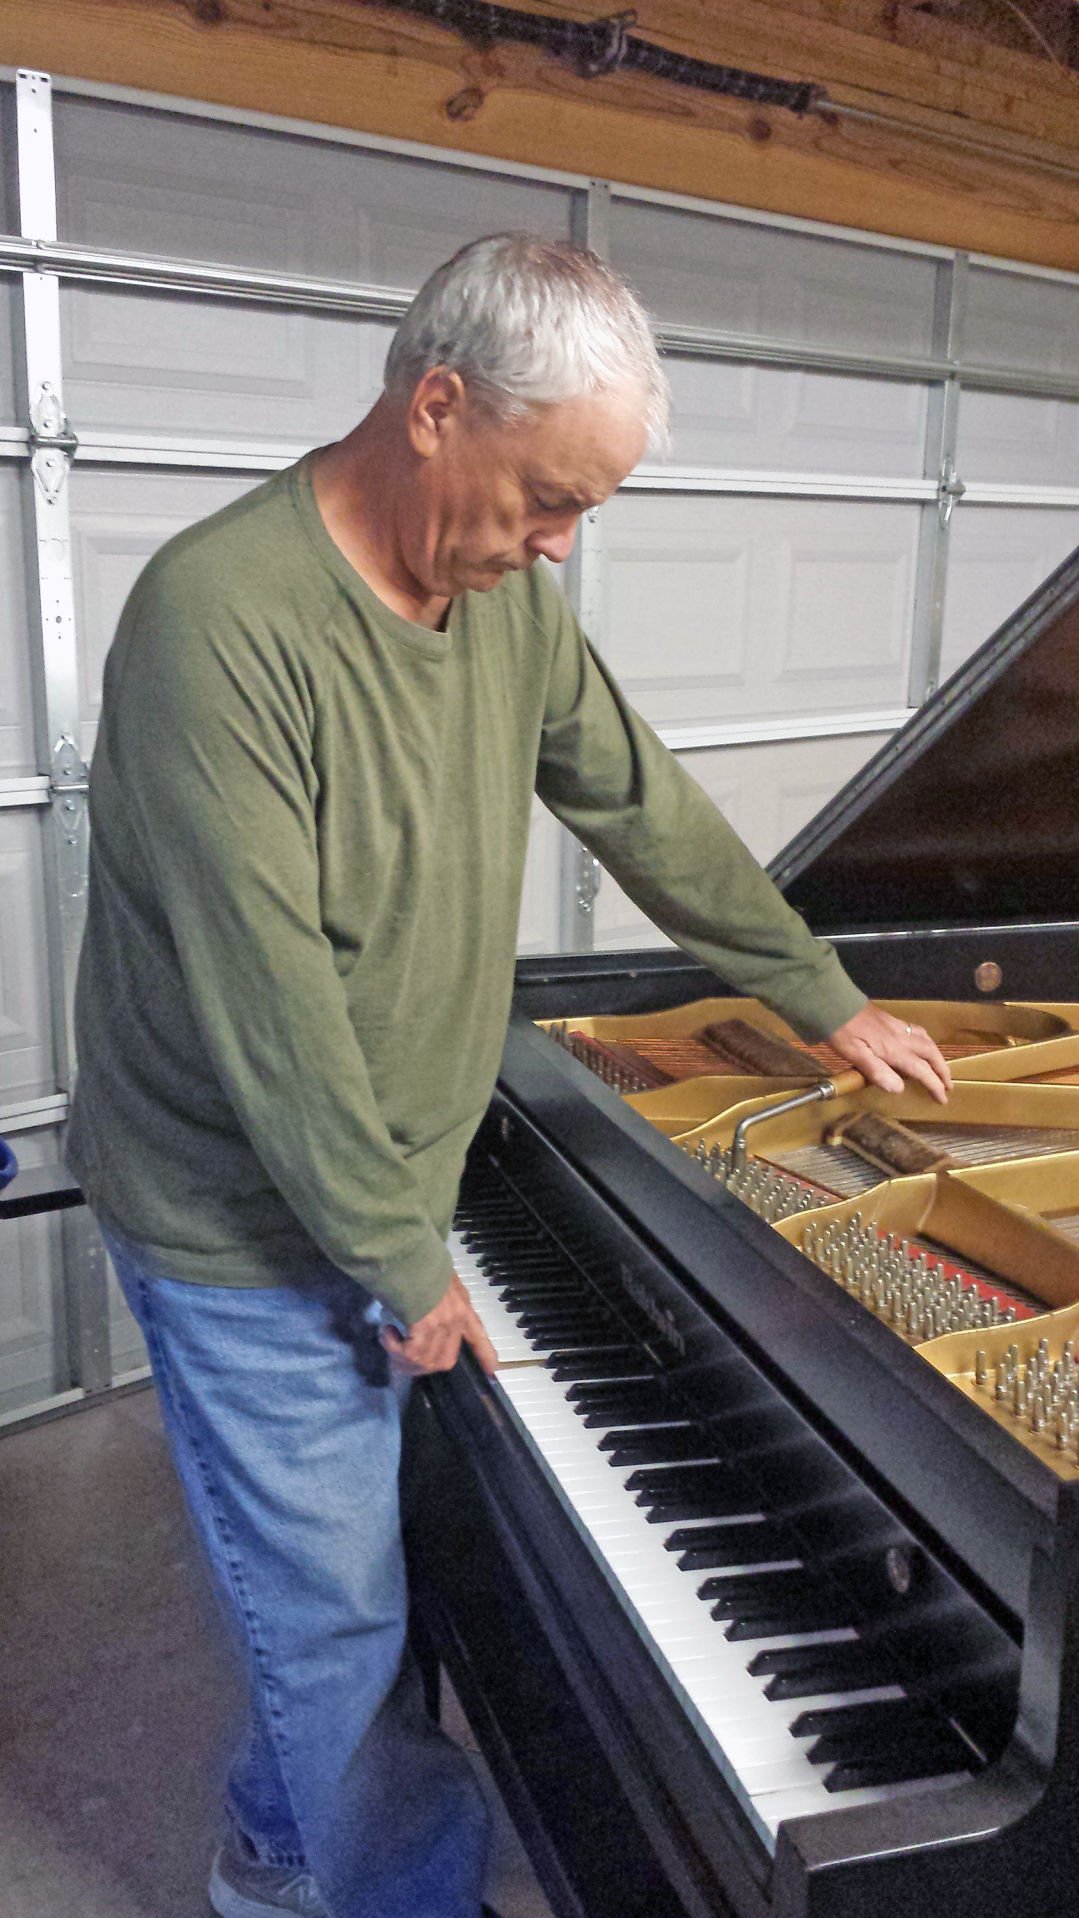 piano tuner jobs